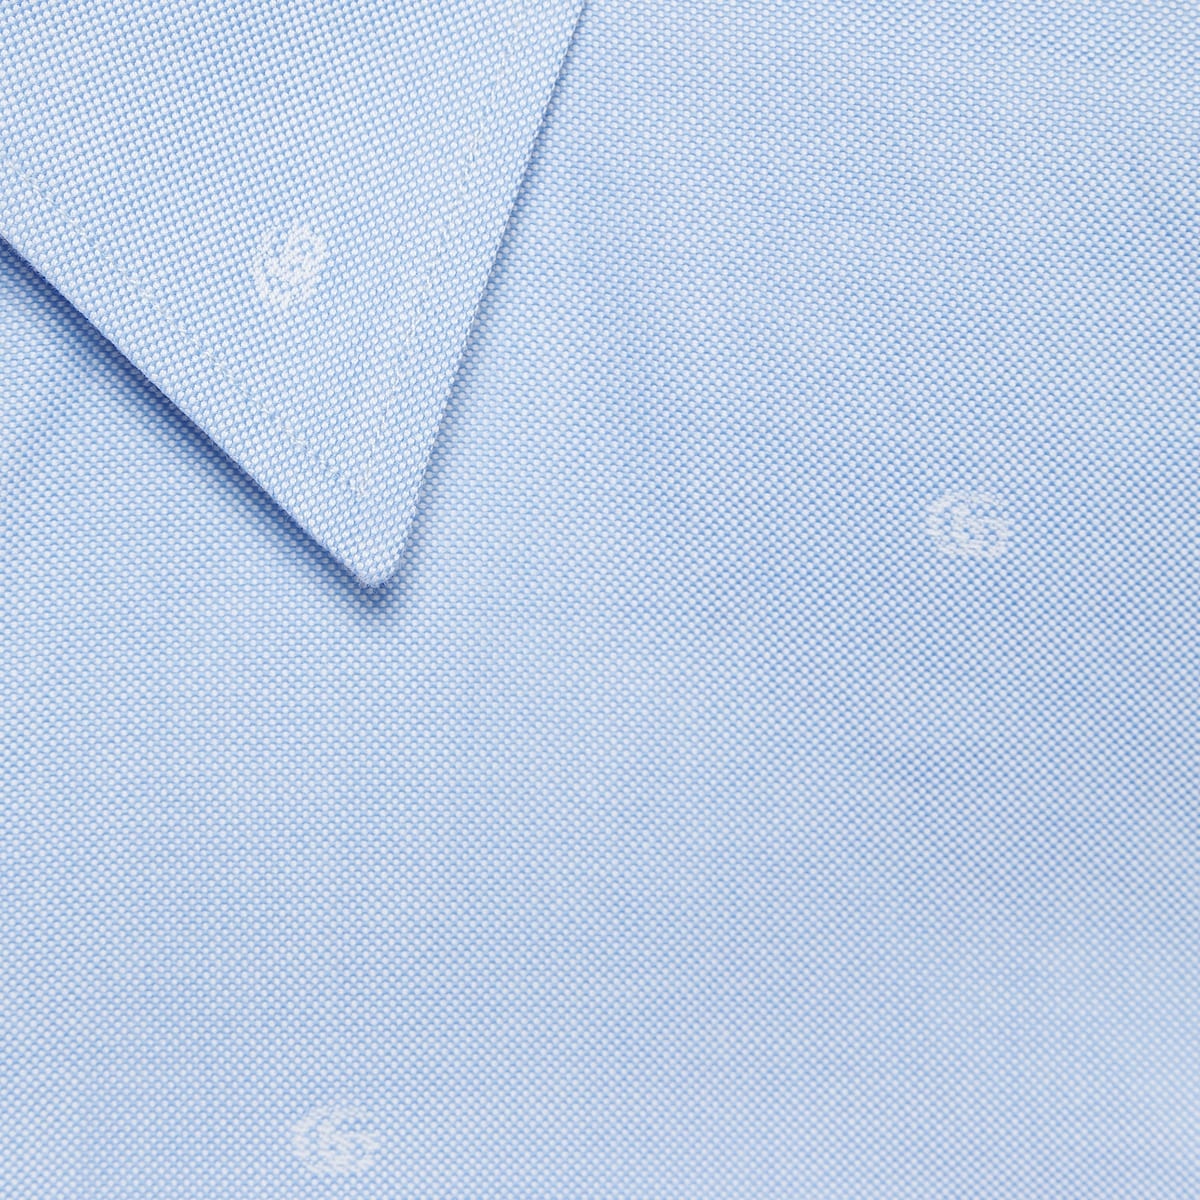 GG cotton jacquard shirt - 4